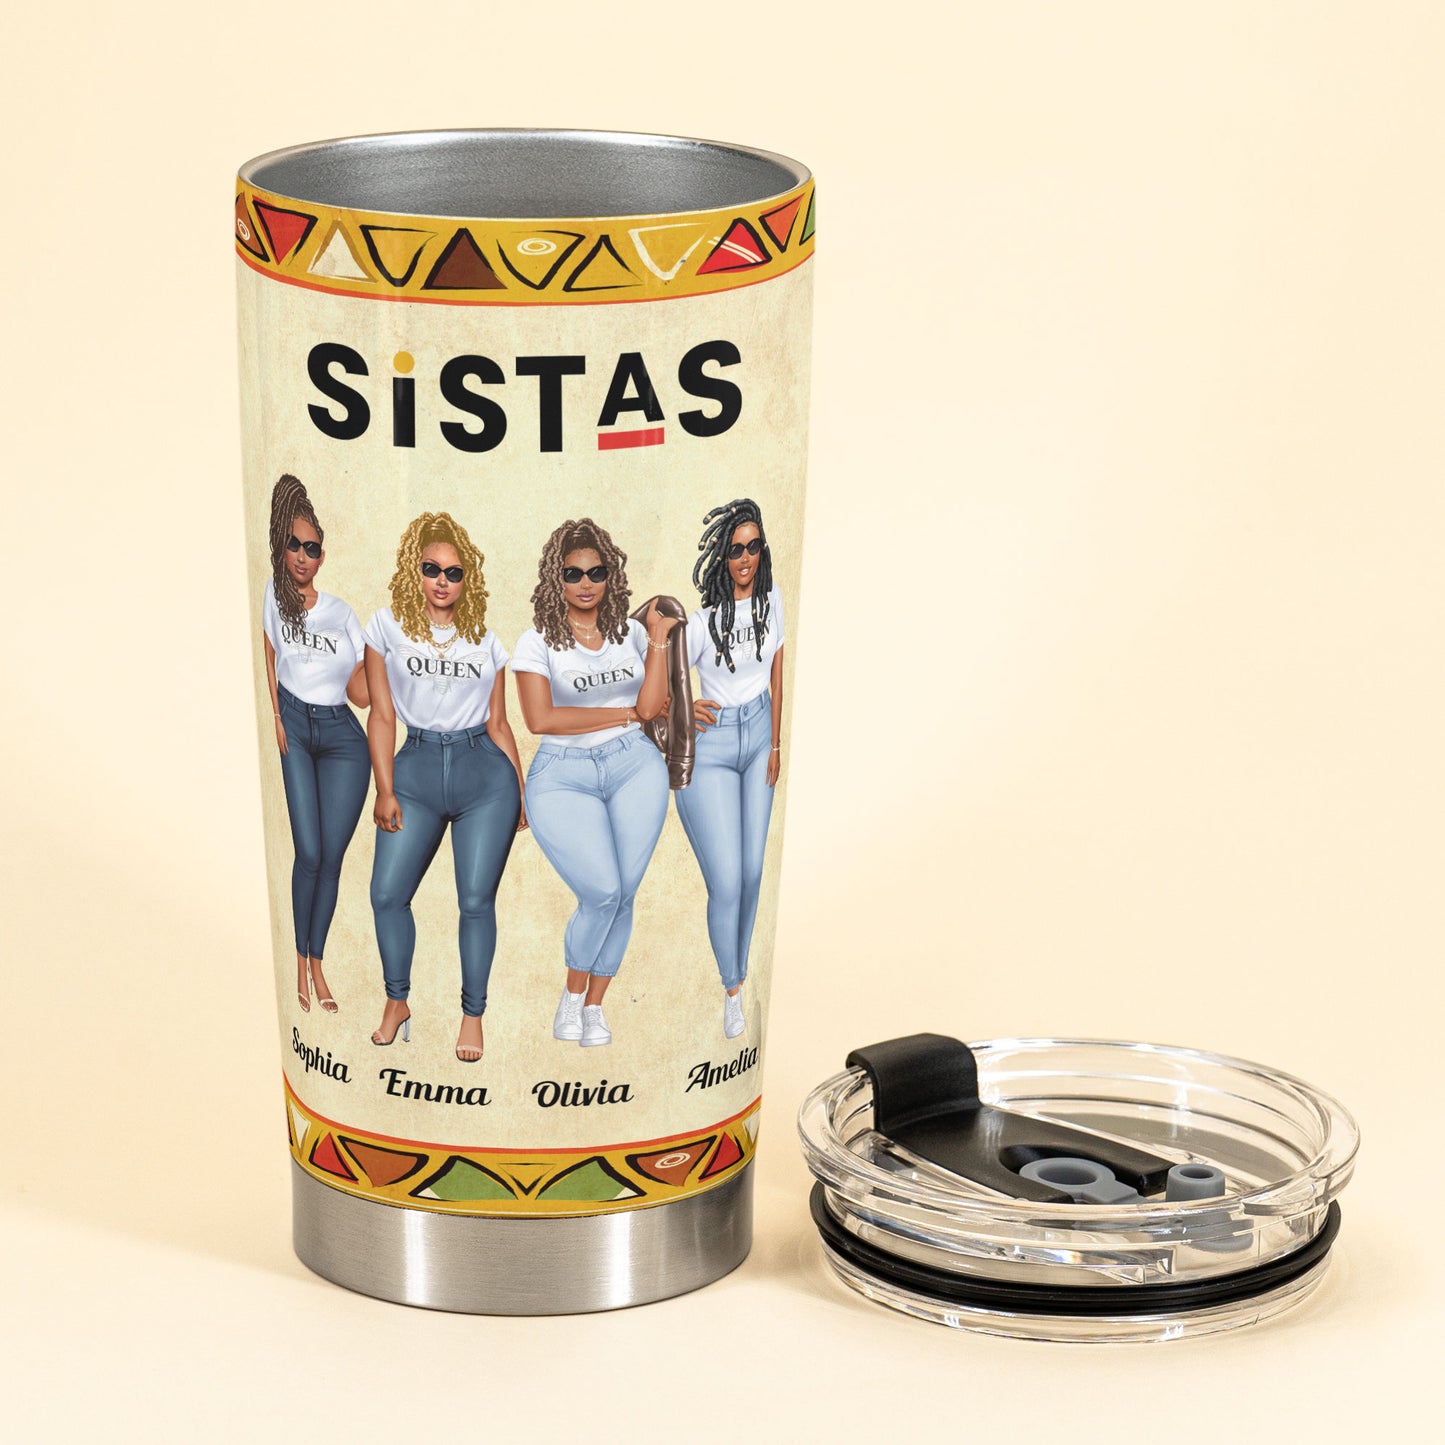 Sistas Forever - Personalized Tumbler - Birthday Gift For Sistas, BFF, Black Woman